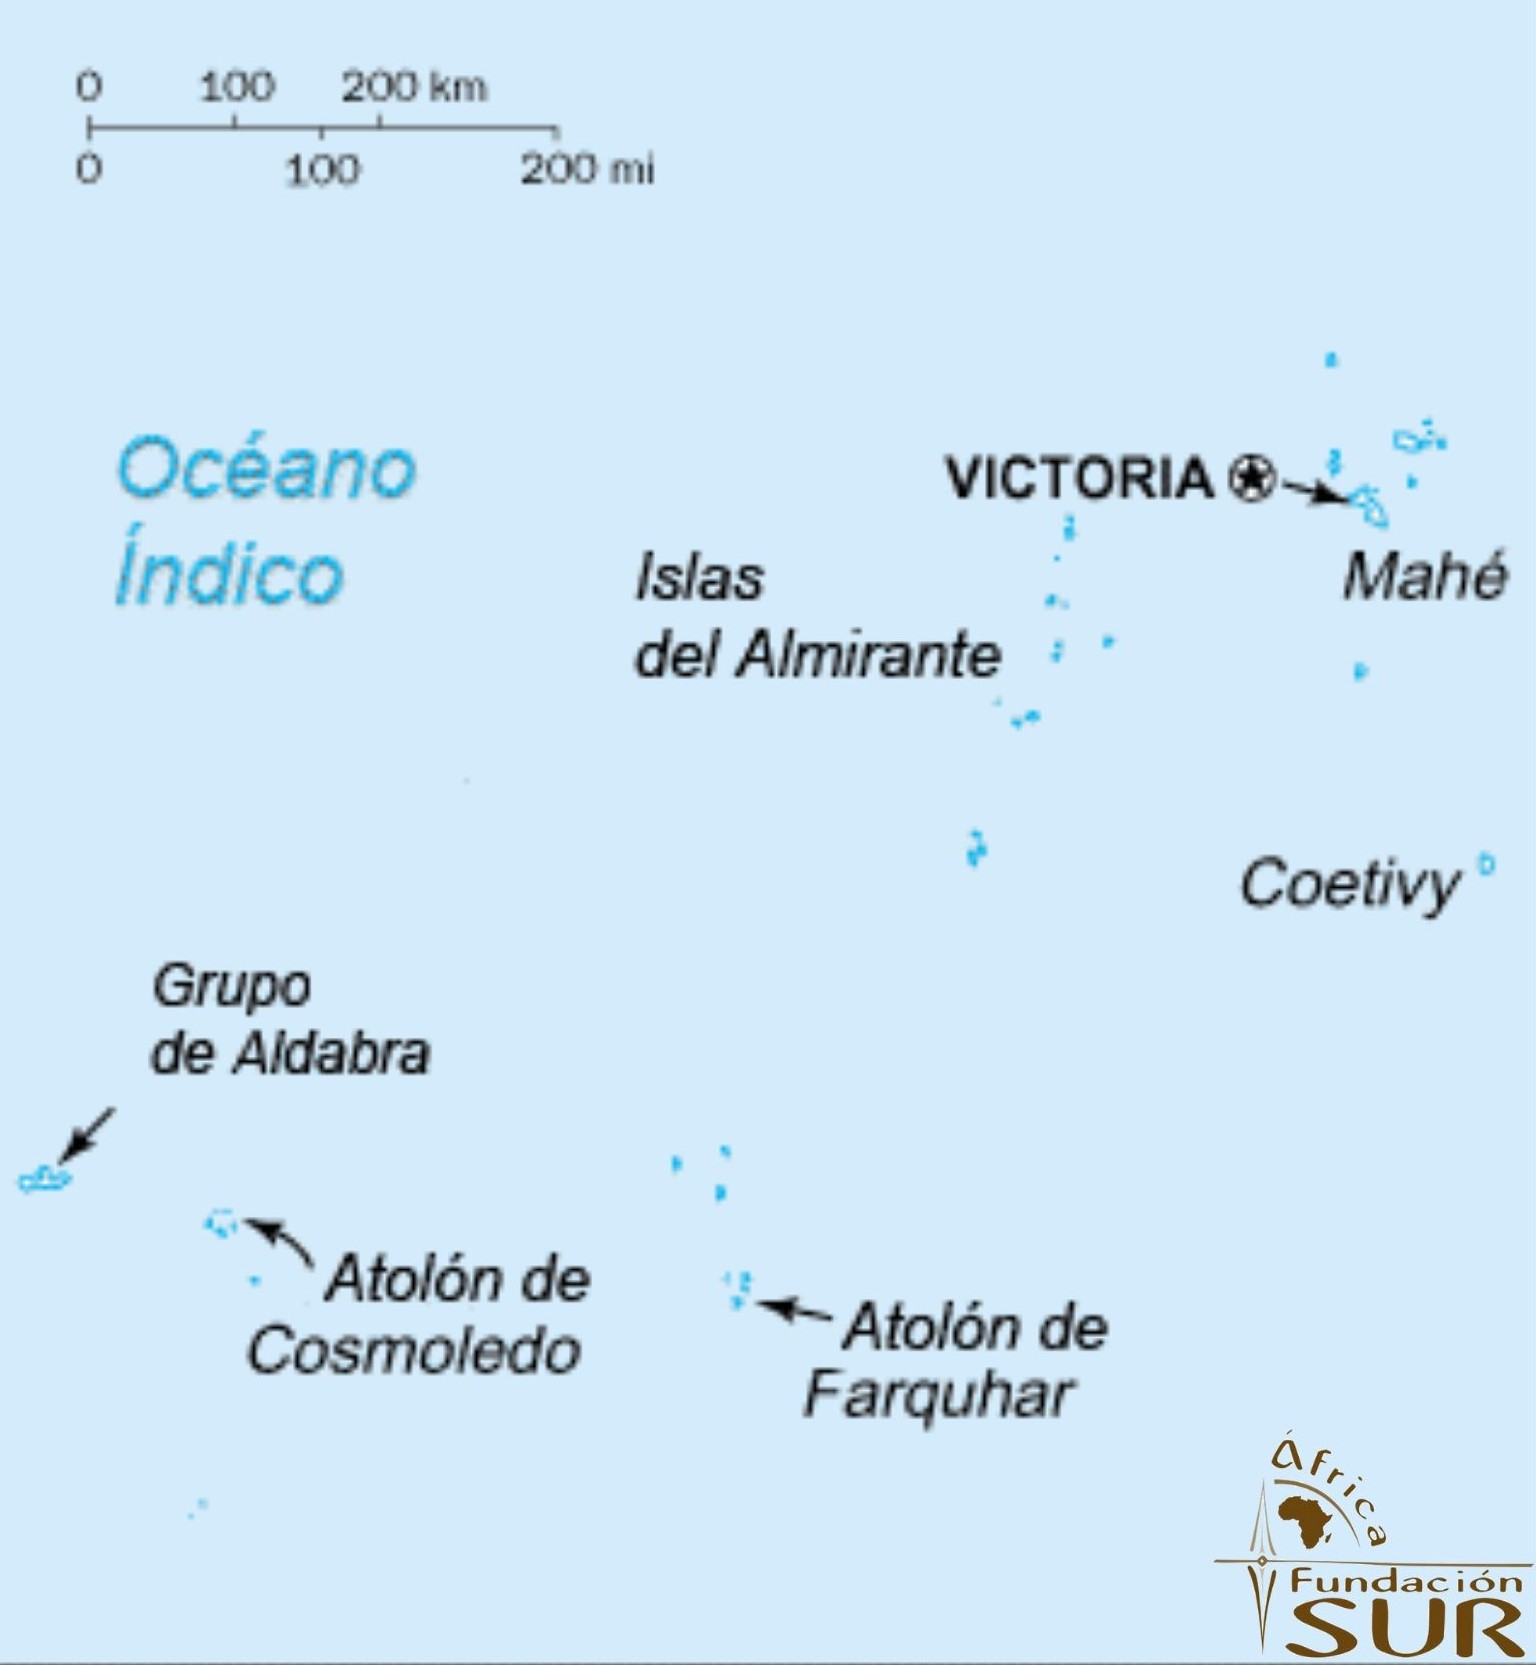 mapa_seychelles_cc0-3.jpg